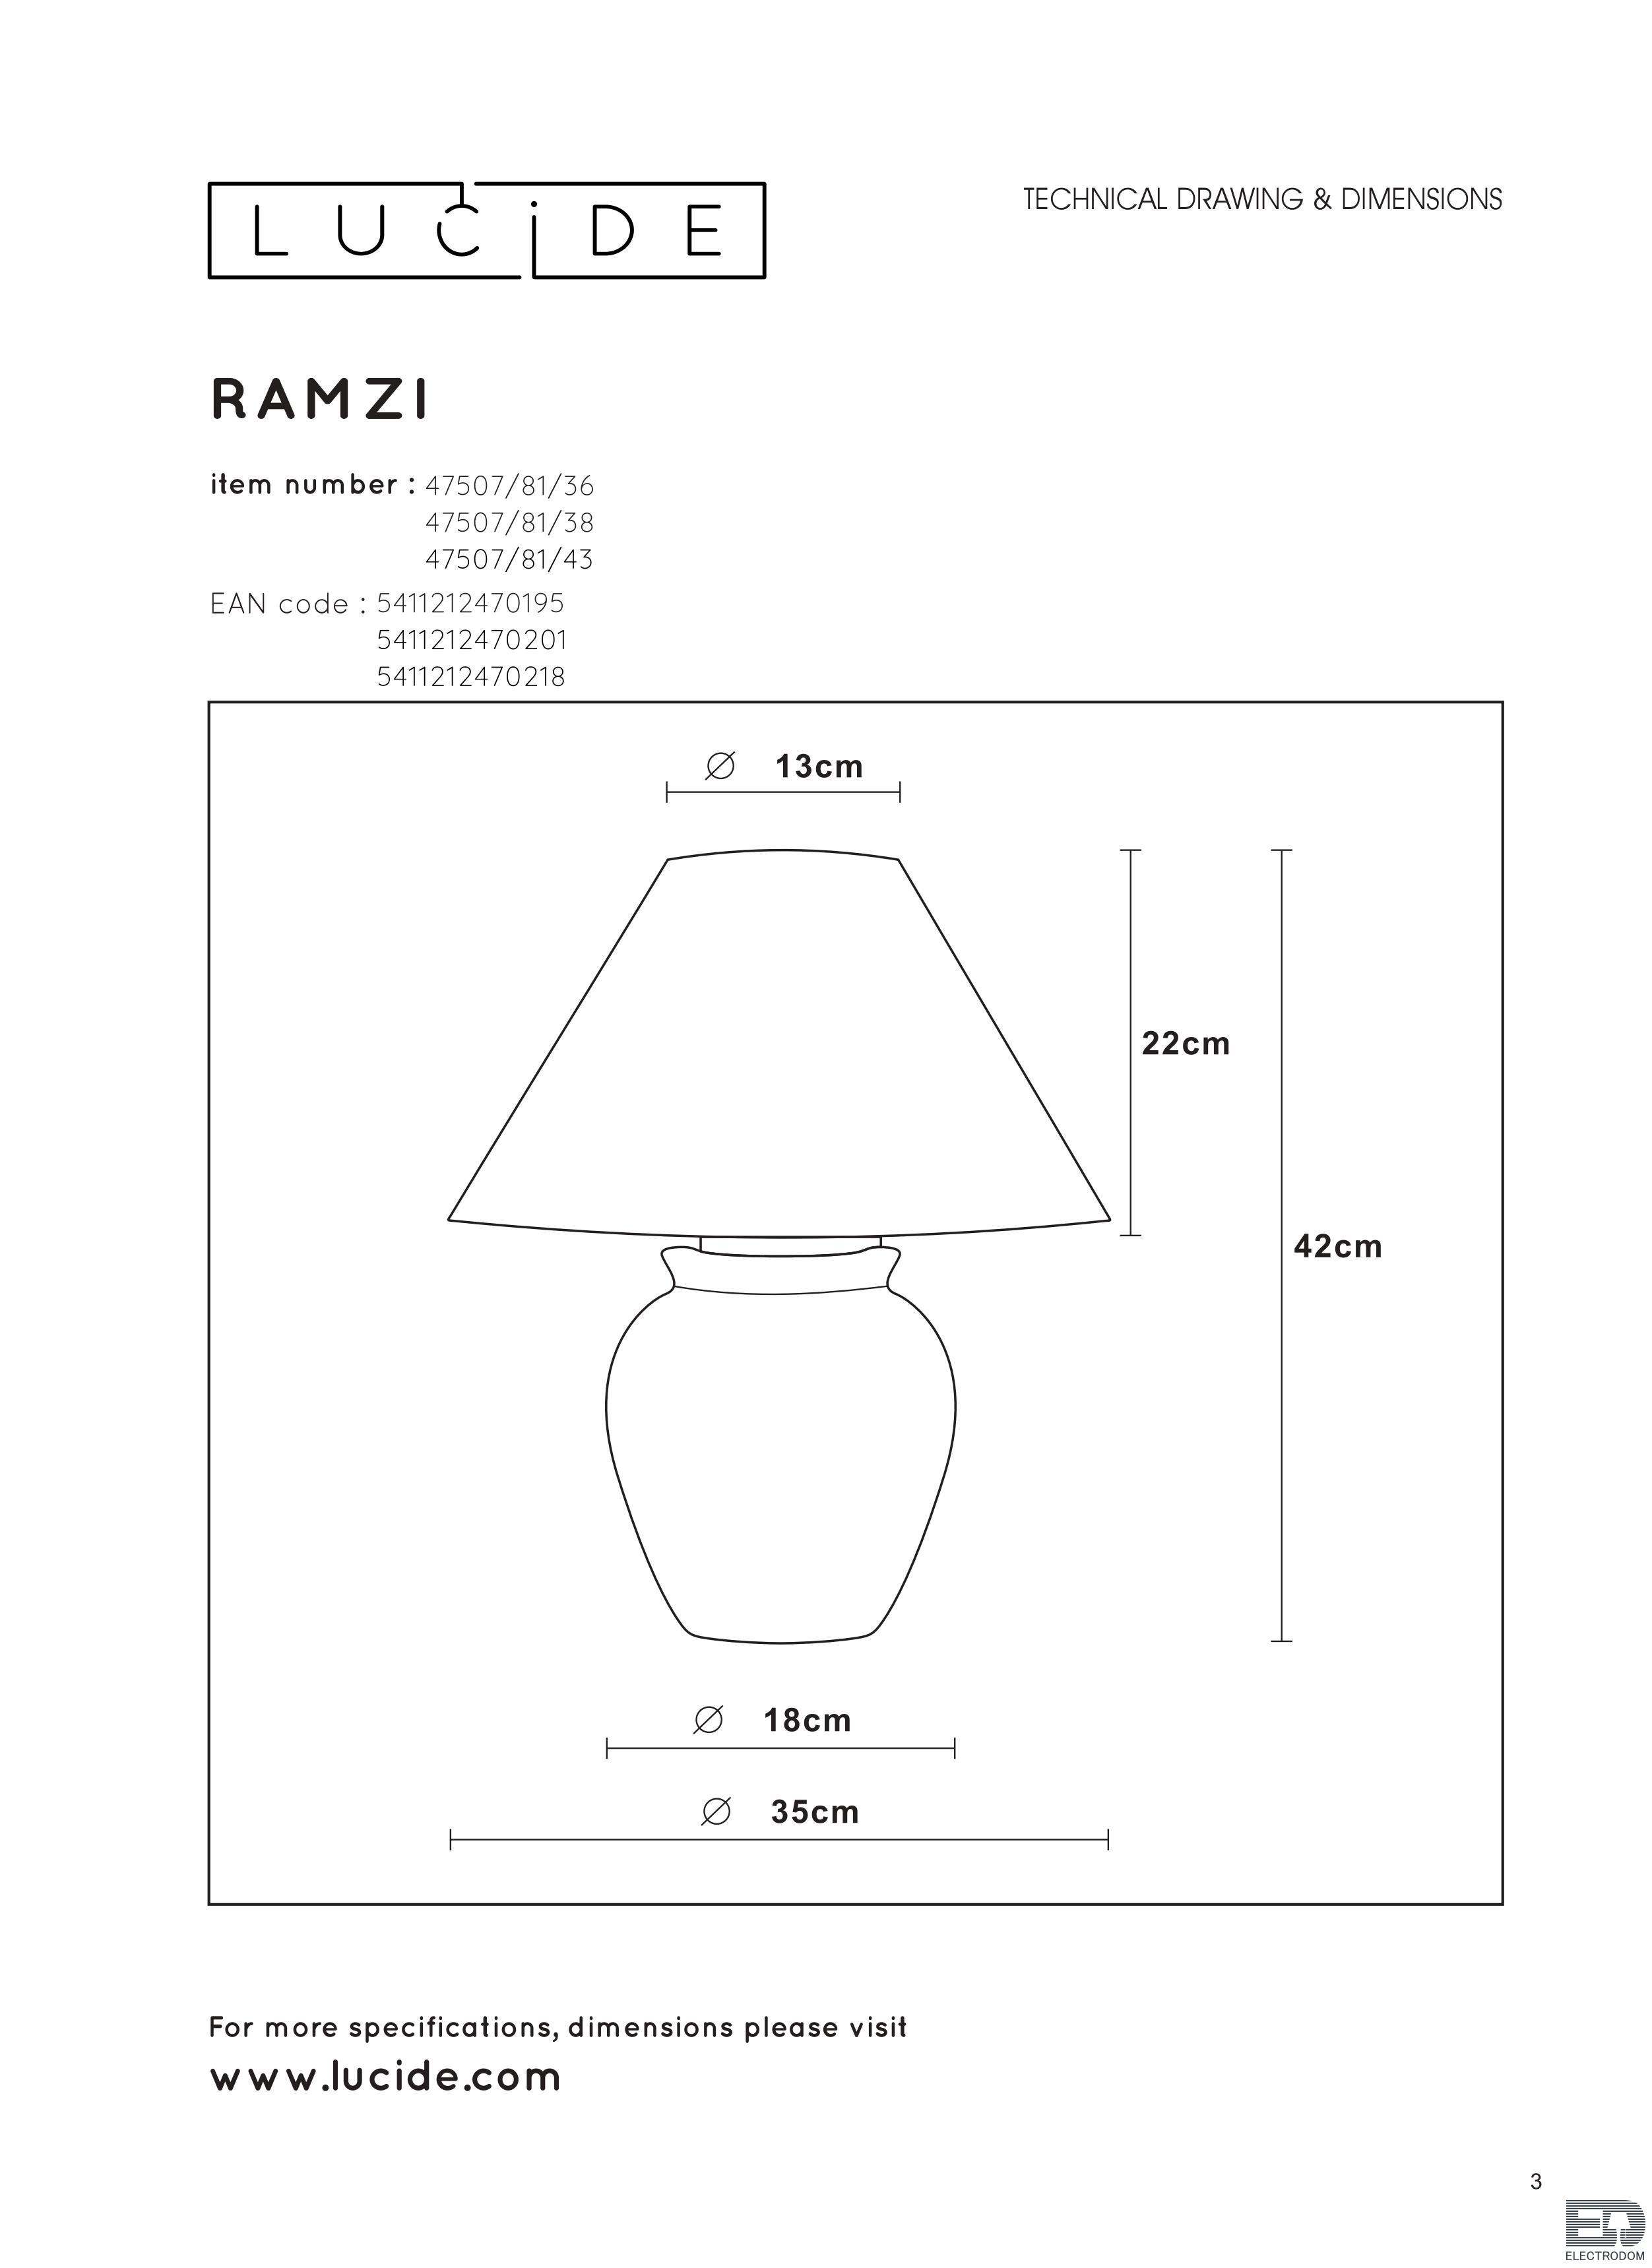 Настольная лампа Lucide Ramzi 47507/81/43 - цена и фото 4